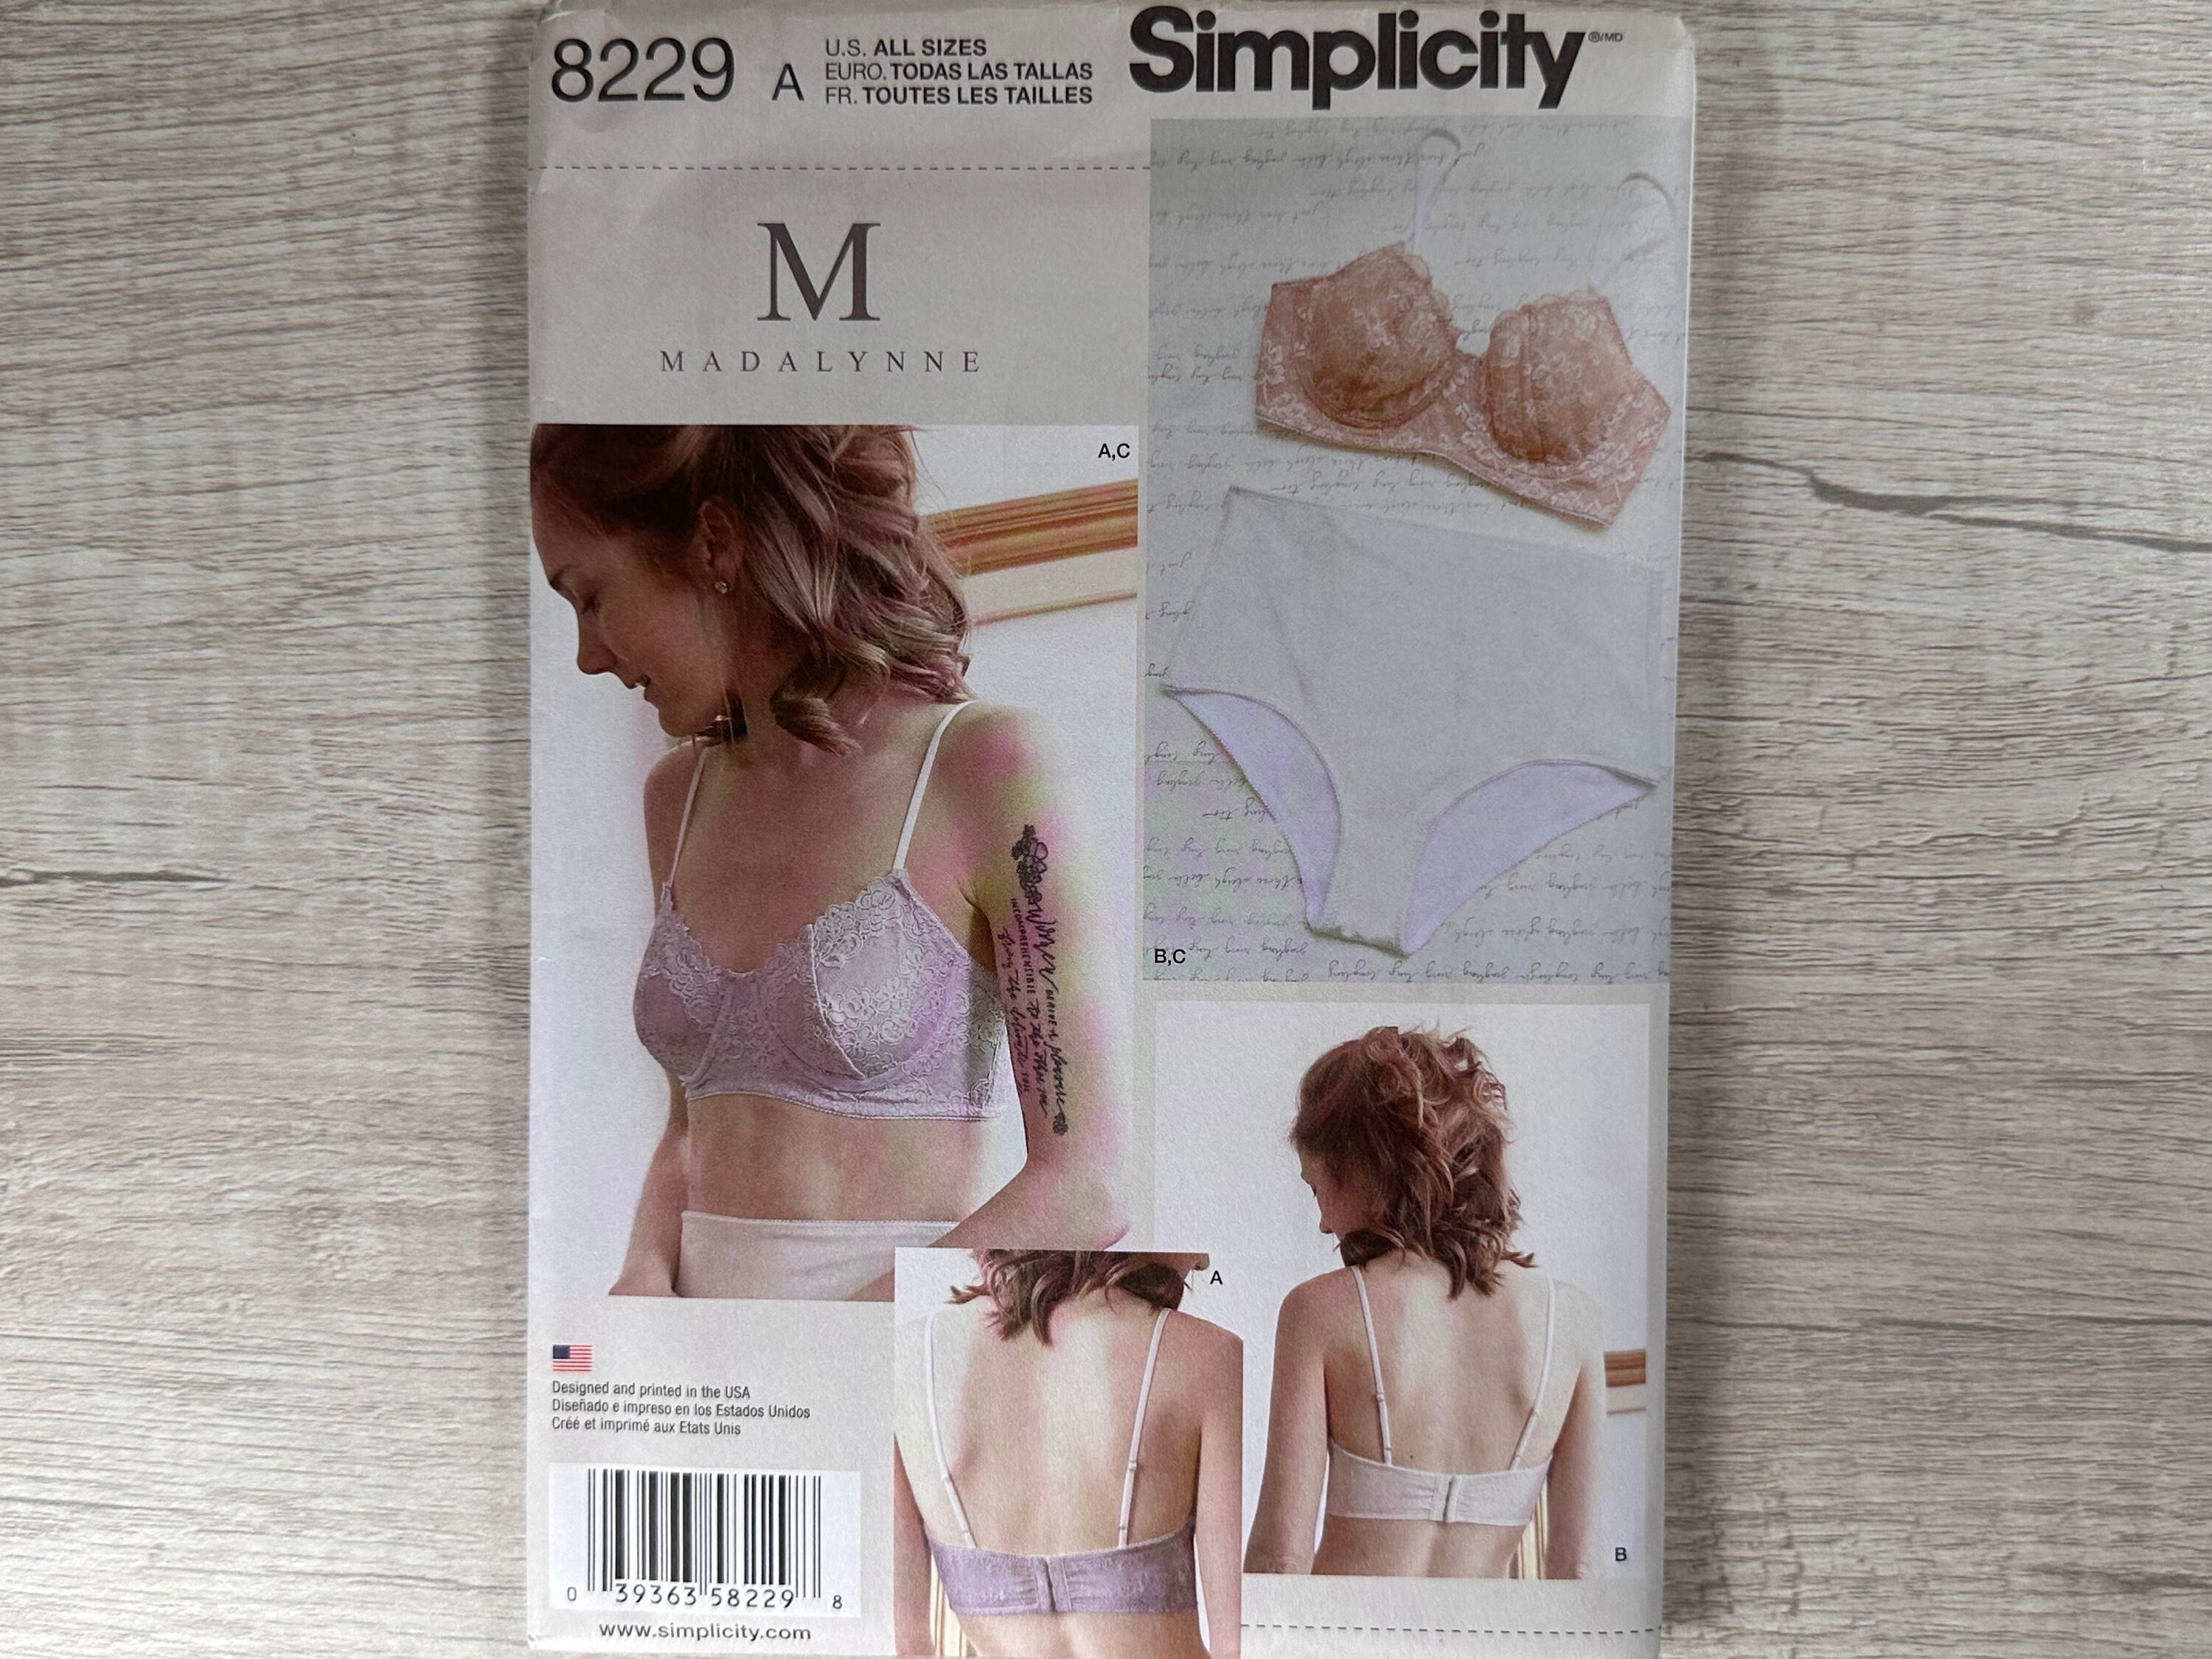 Simplicity Sewing Pattern 8229, Madalynne Misses' Underwire Bras and Panties  -  Sweden